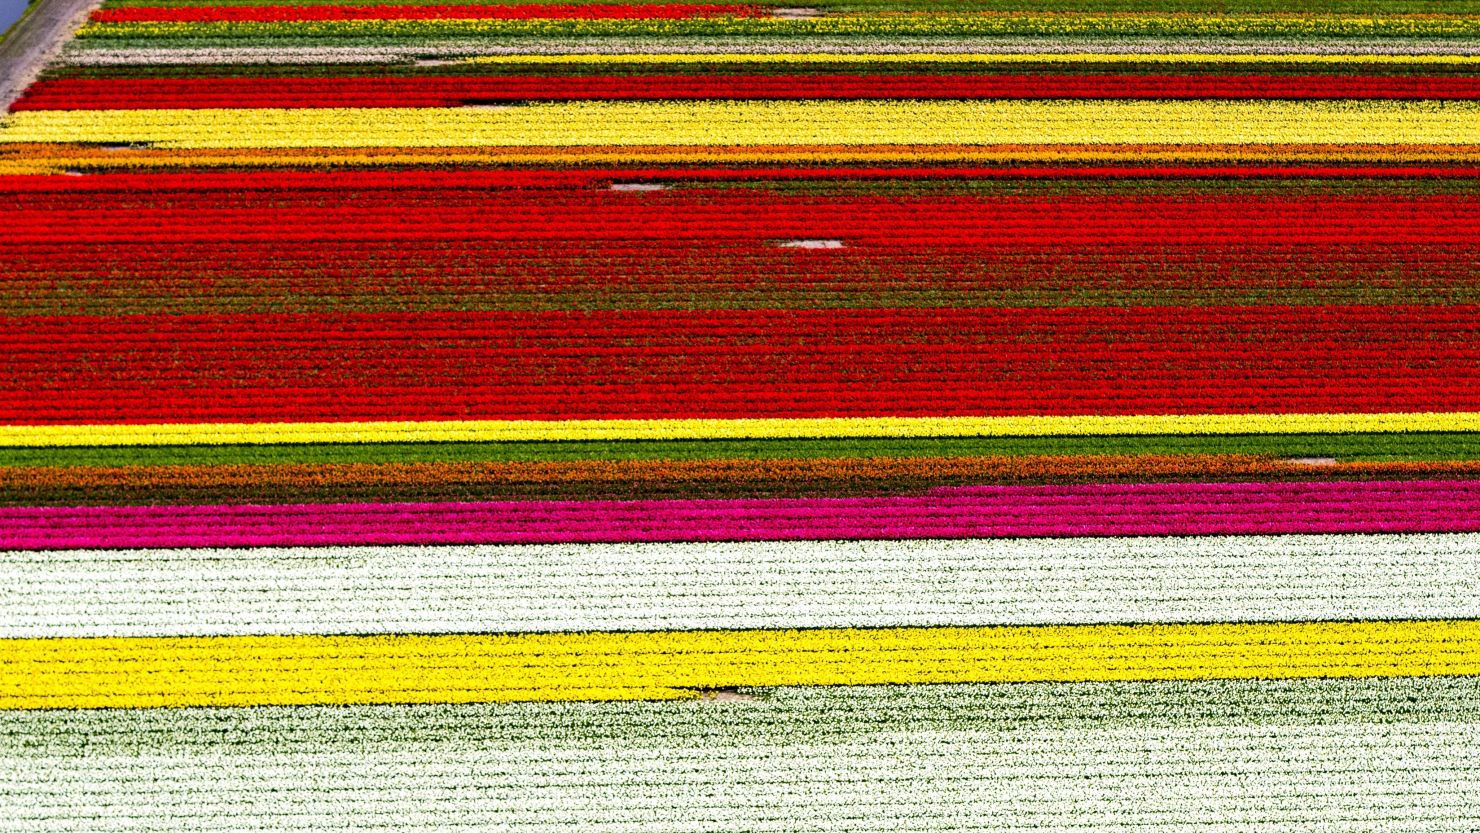 An aerial photo taken in April 2017 shows the tulip fields of Keukenhof in full bloom.